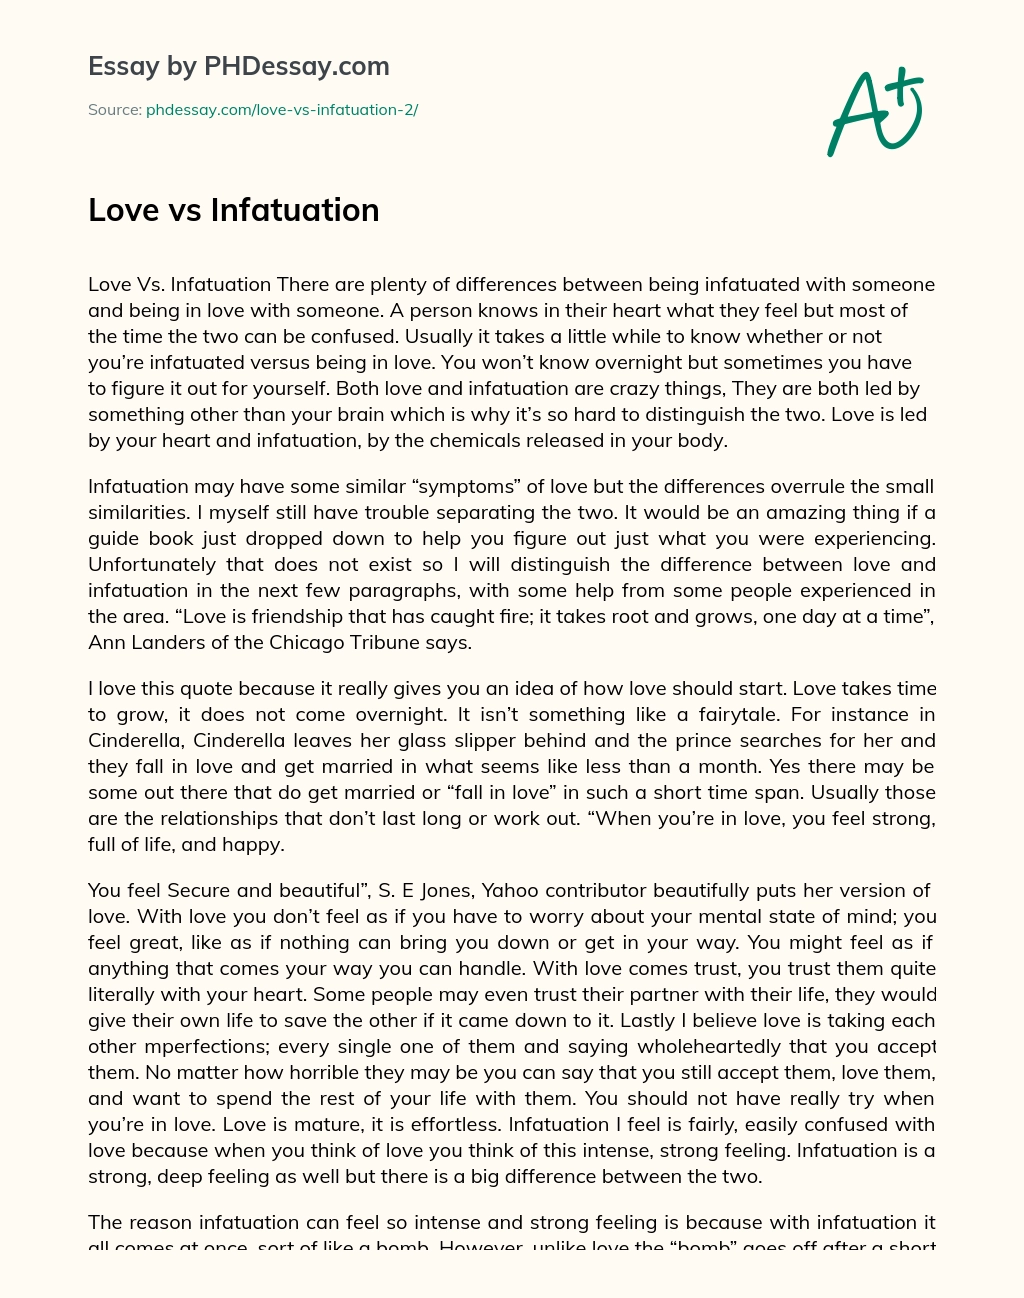 Love vs Infatuation essay